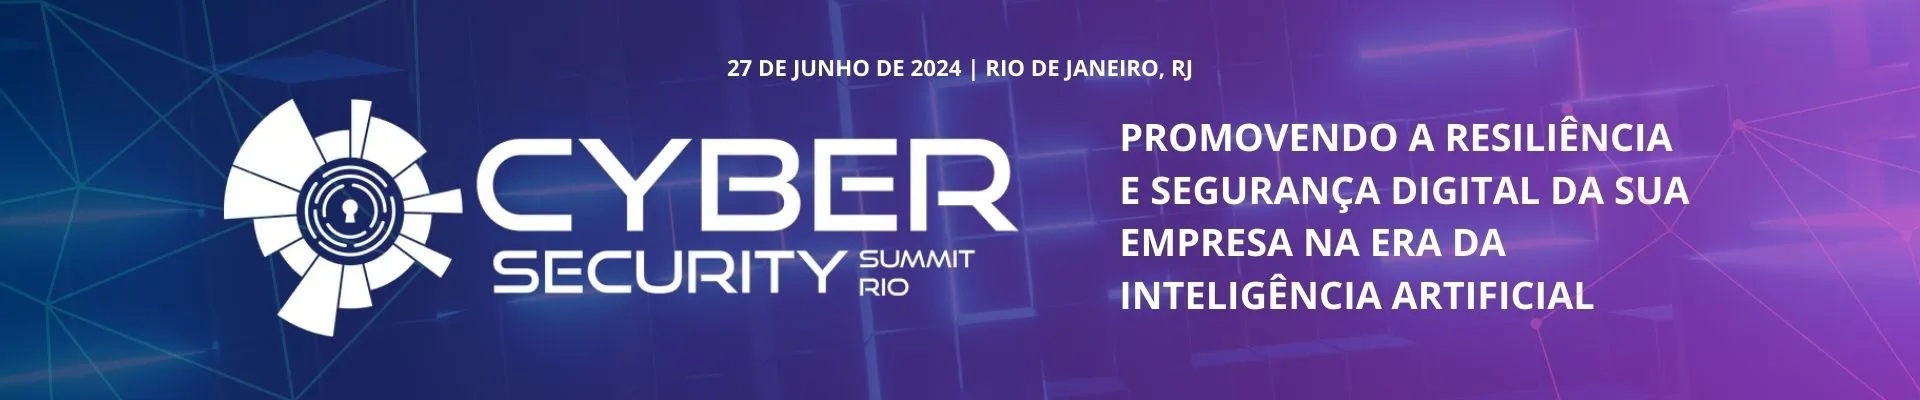 Cybersecurity Summit Rio 2024